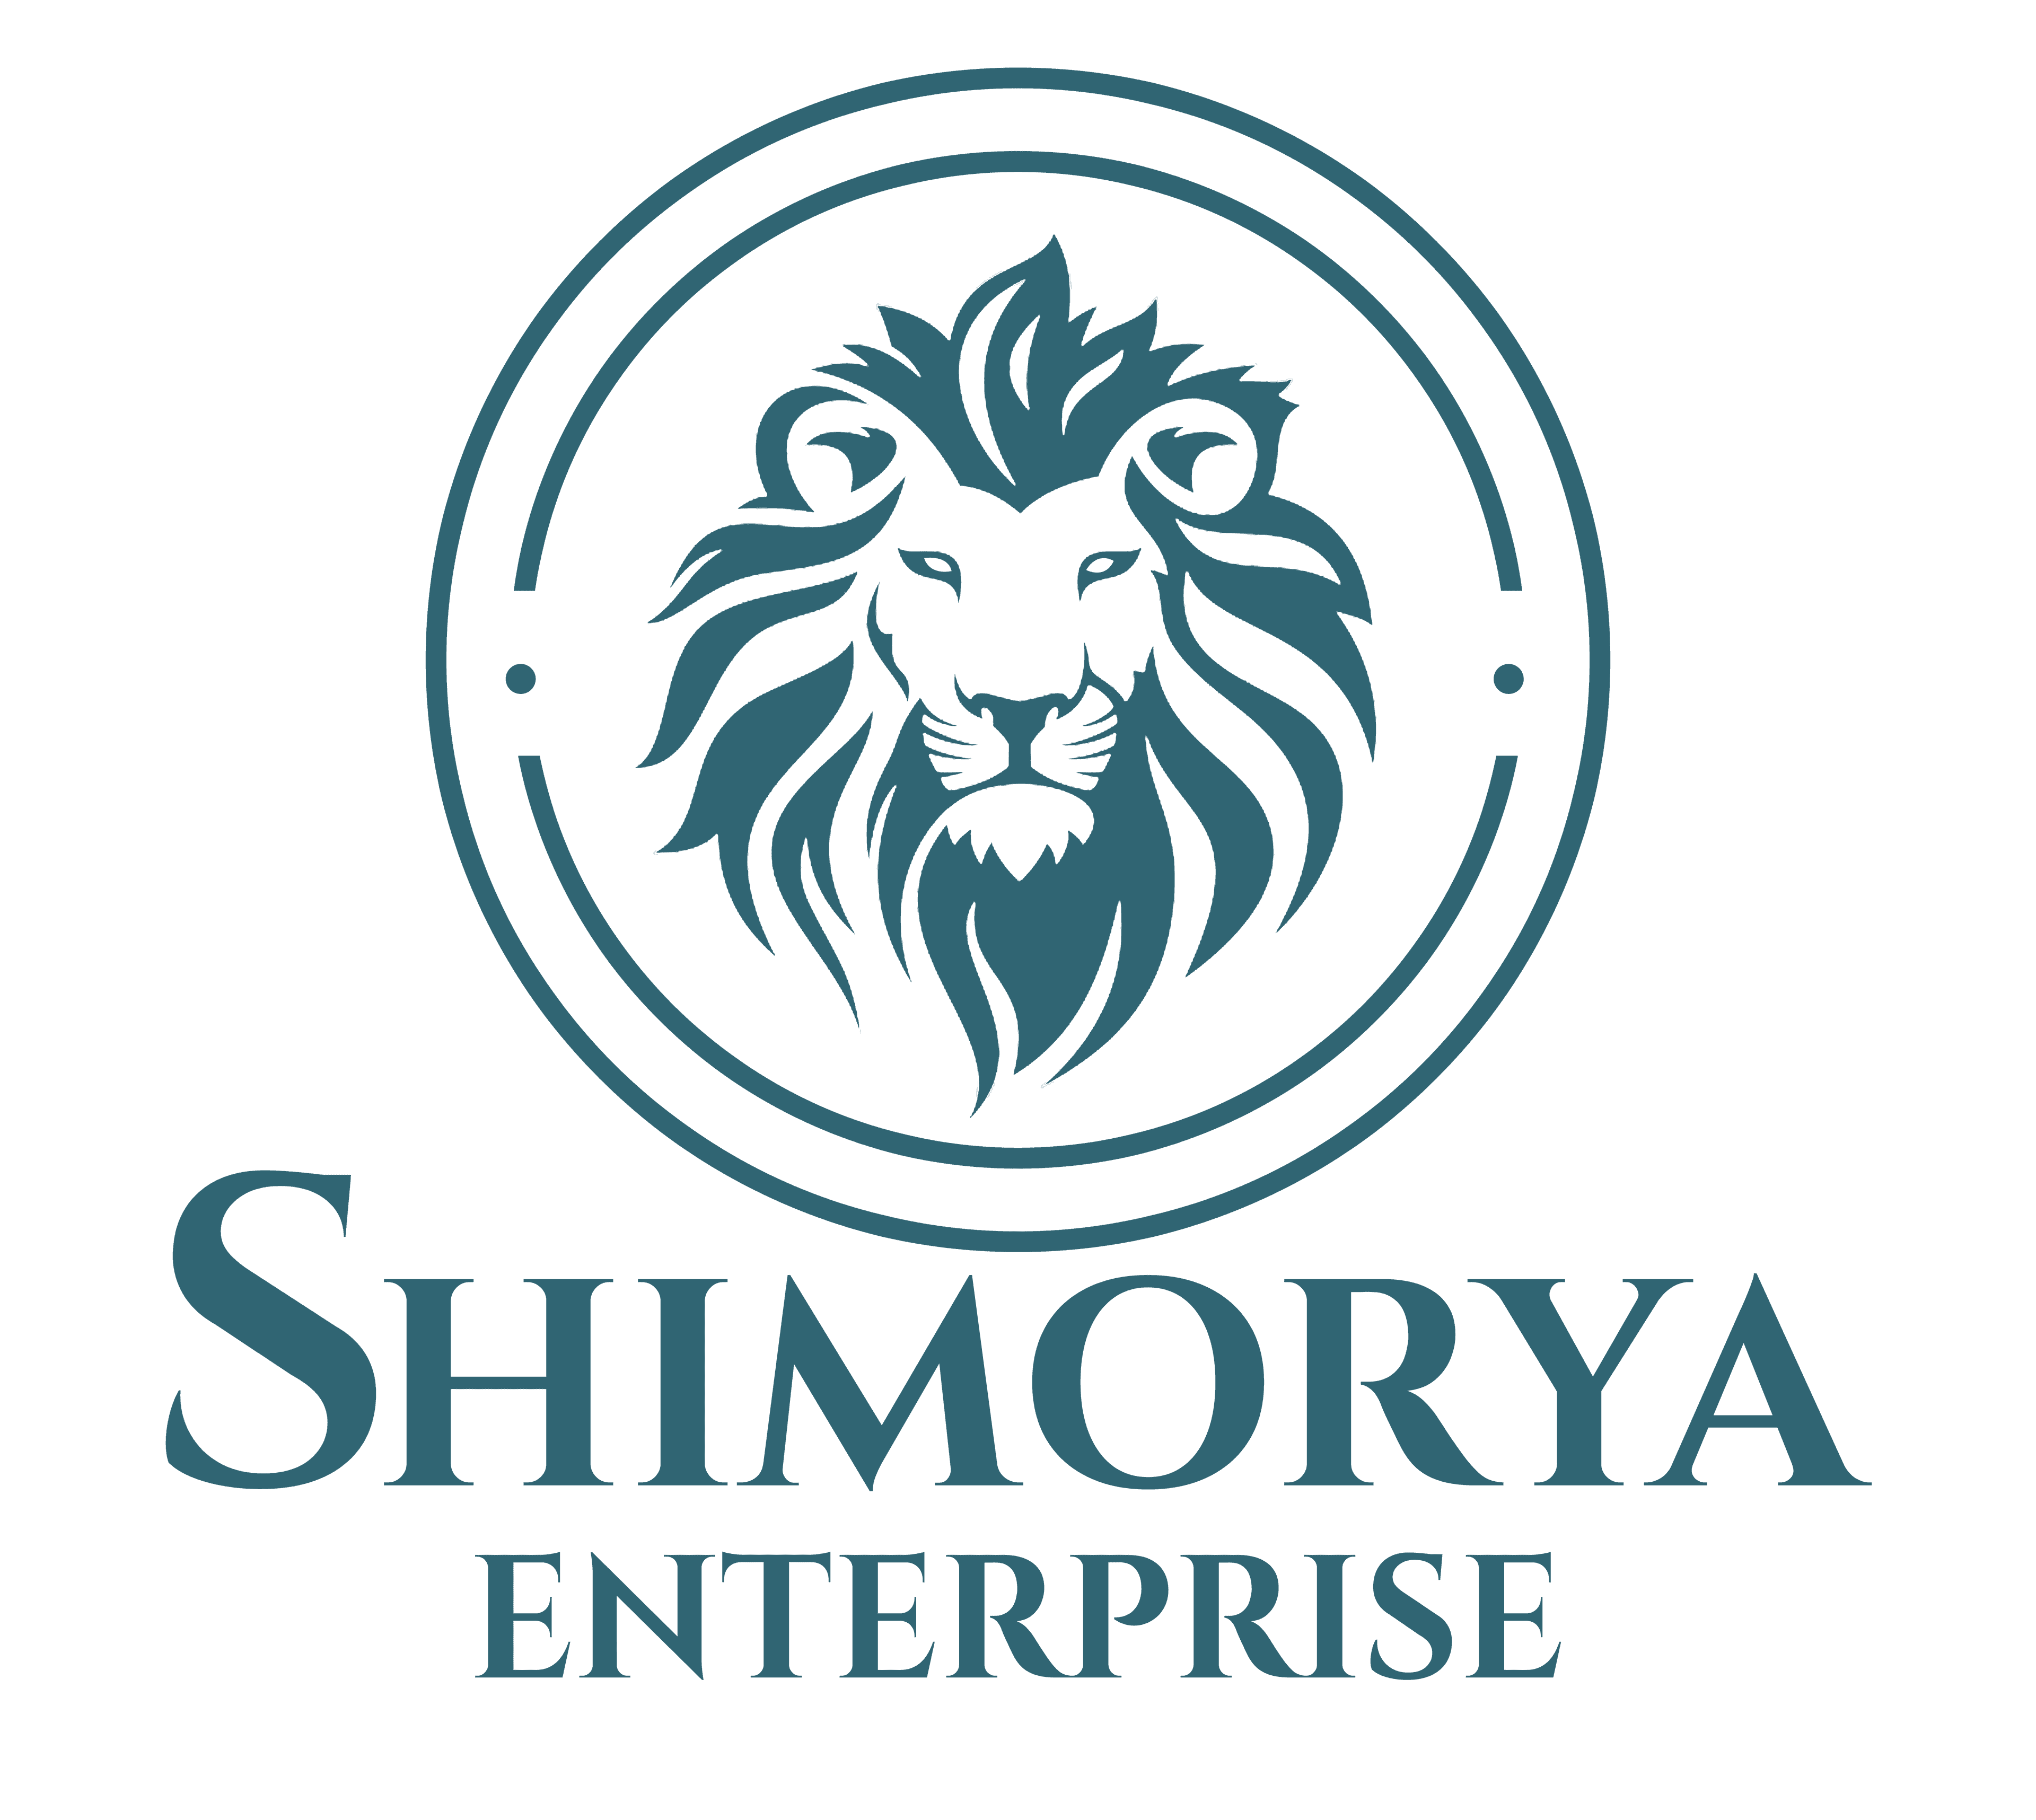 Shimorya Enterprise